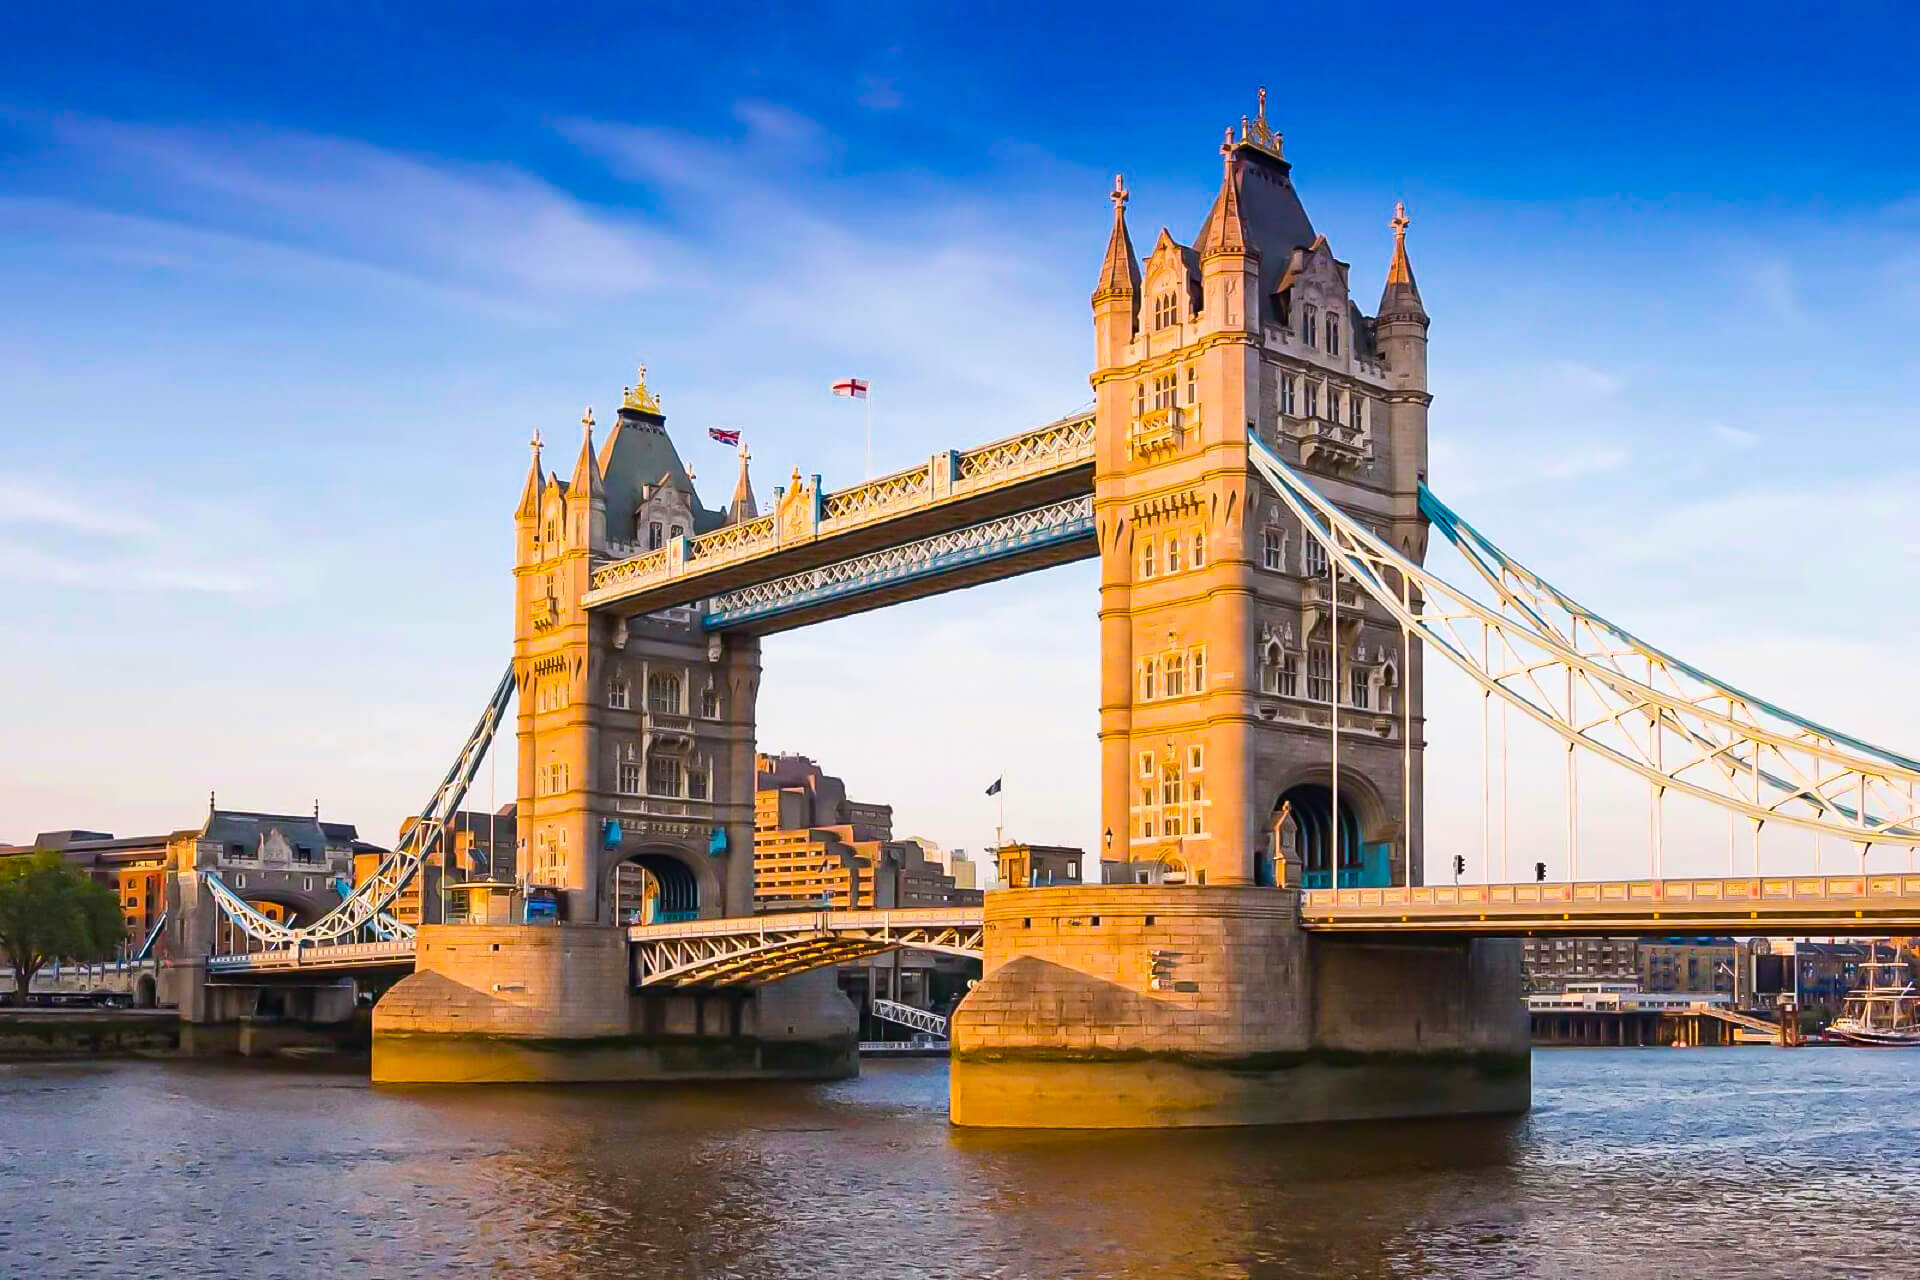 Tower Bridge in London, United Kingdom